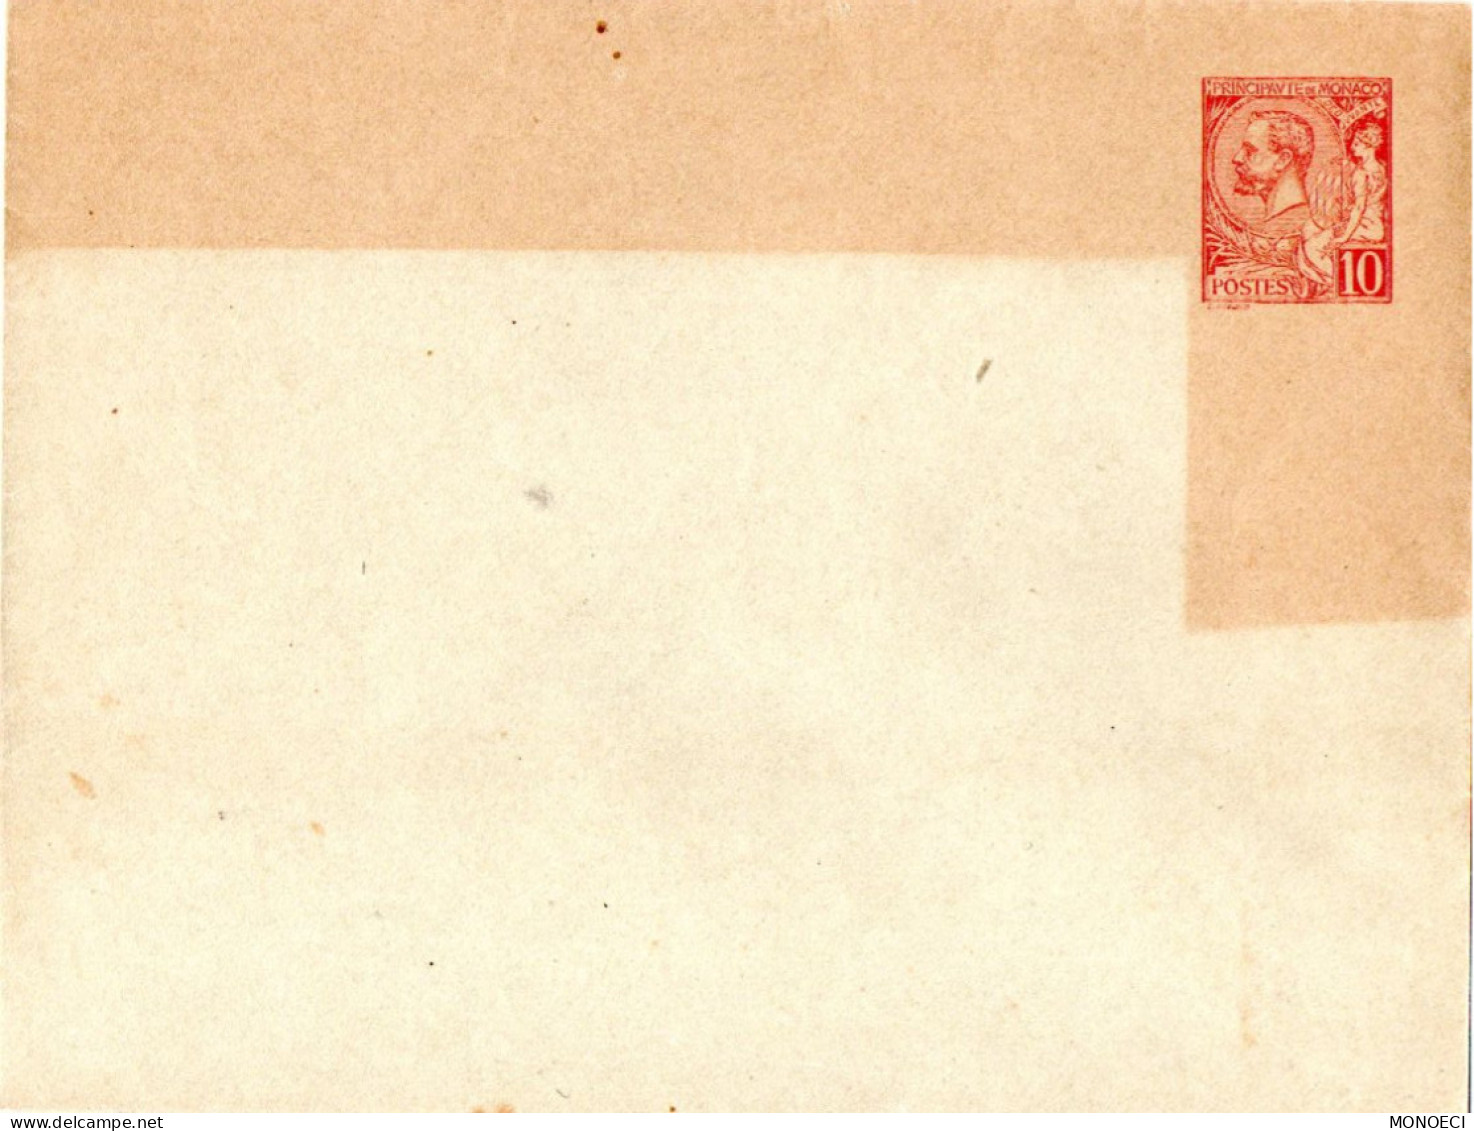 MONACO -- MONTE CARLO -- Entier Postal -- Enveloppe -- Prince Albert 1er -- 10 C. Carmin  Sur Vert  (1906) 147 X 112 - Ganzsachen